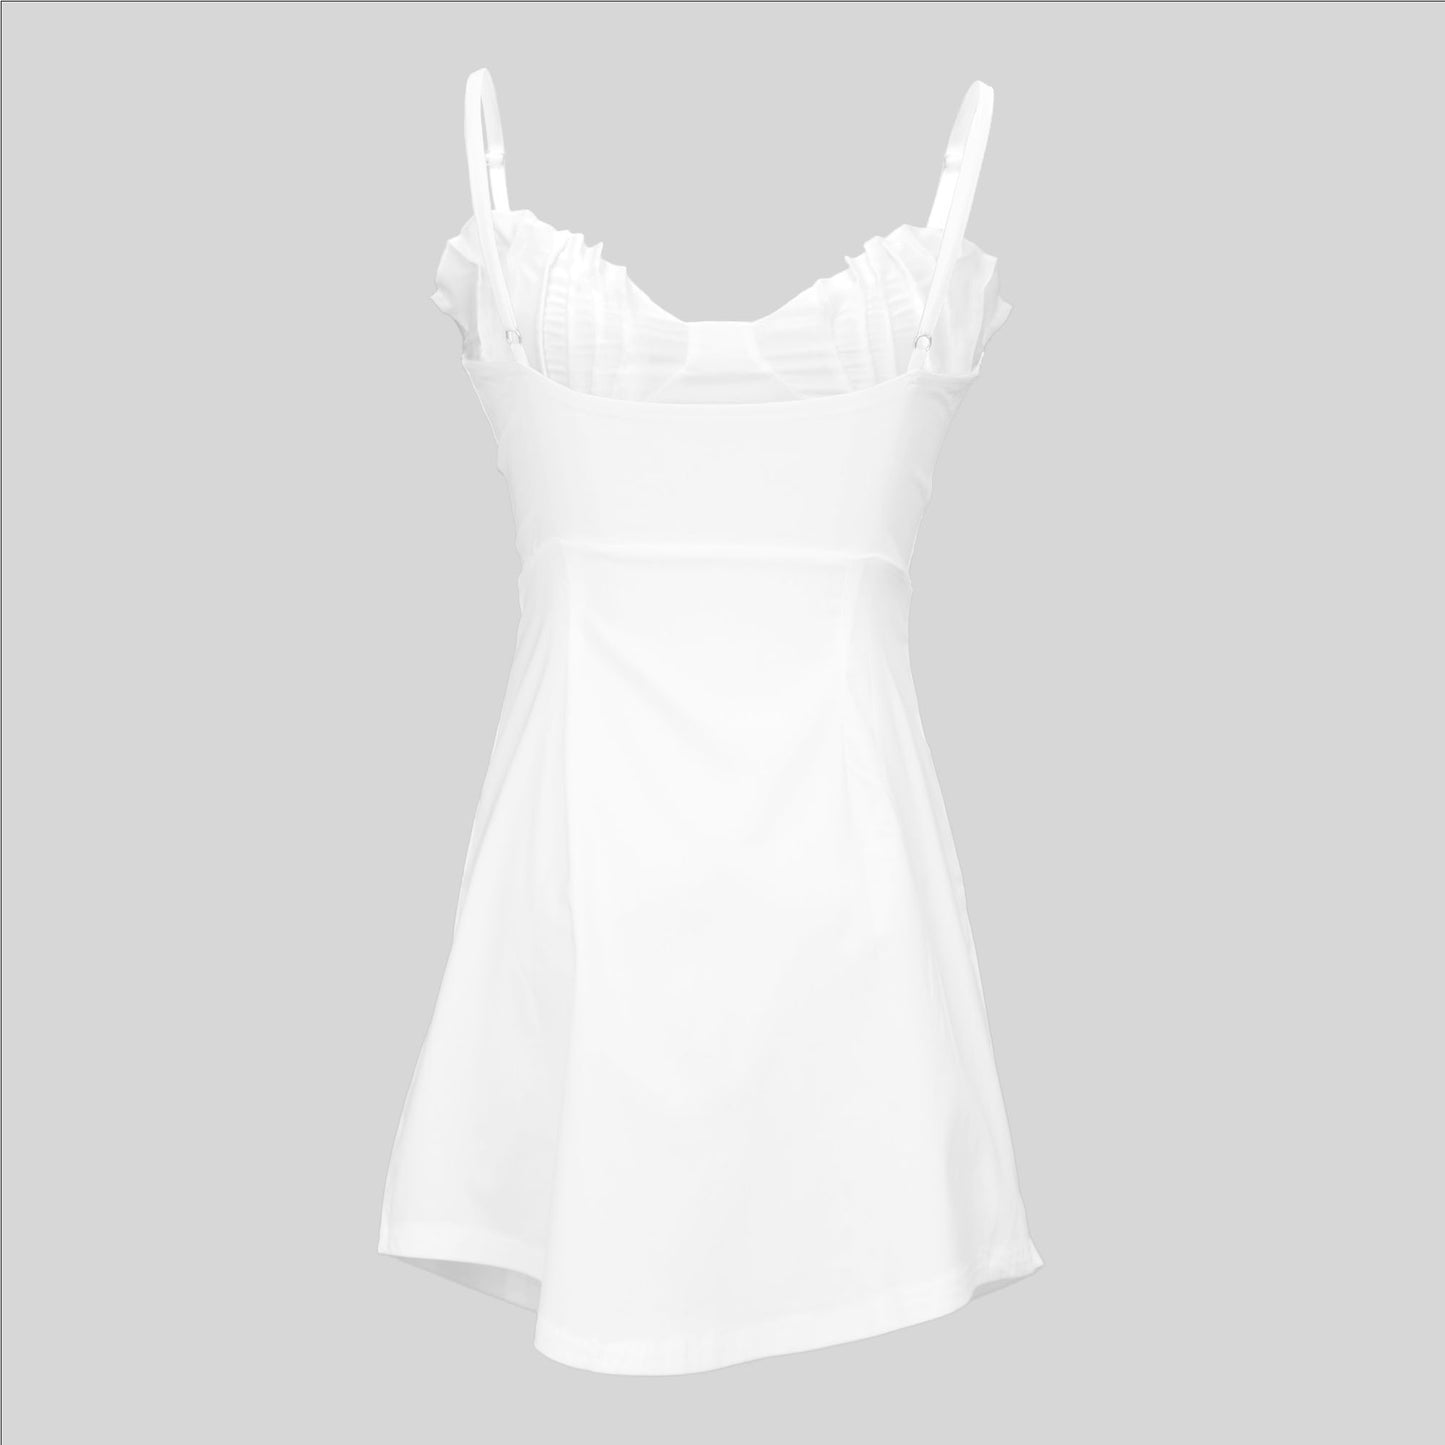 Tulip Corset Style Side Slit White Mini Dress